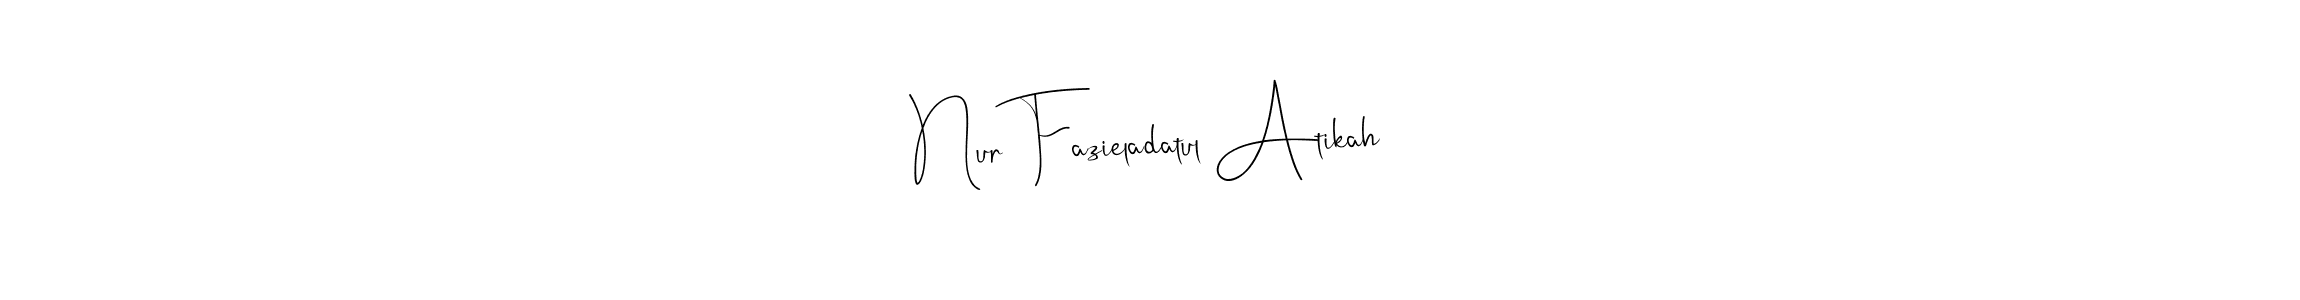 How to Draw Nur Fazieladatul Atikah signature style? Andilay-7BmLP is a latest design signature styles for name Nur Fazieladatul Atikah. Nur Fazieladatul Atikah signature style 4 images and pictures png